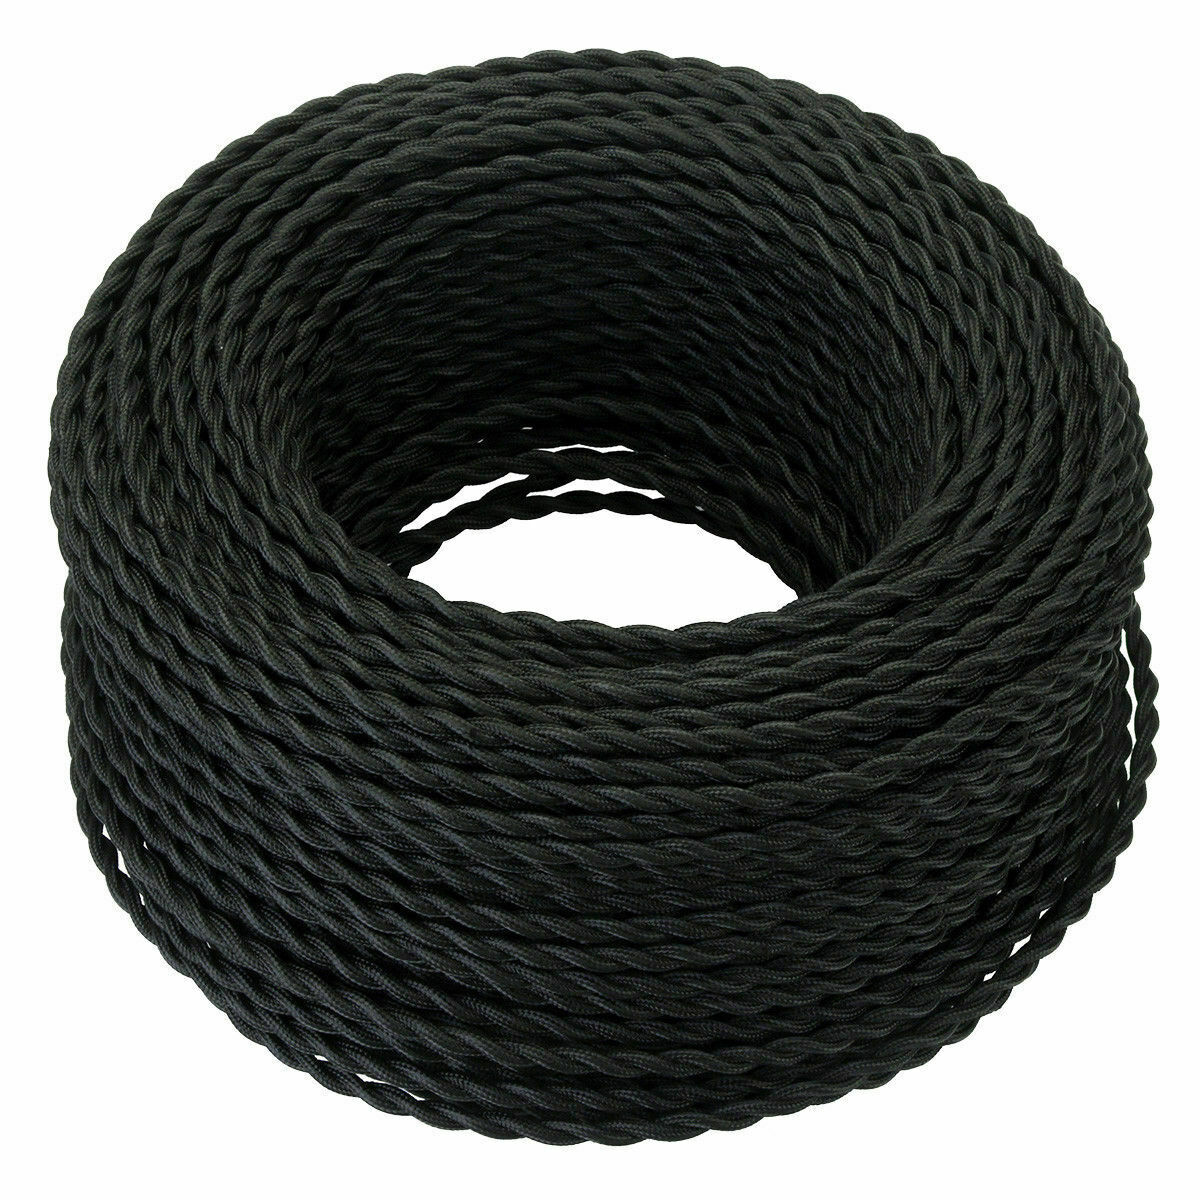 Black Fabric Braided Cable.JPG